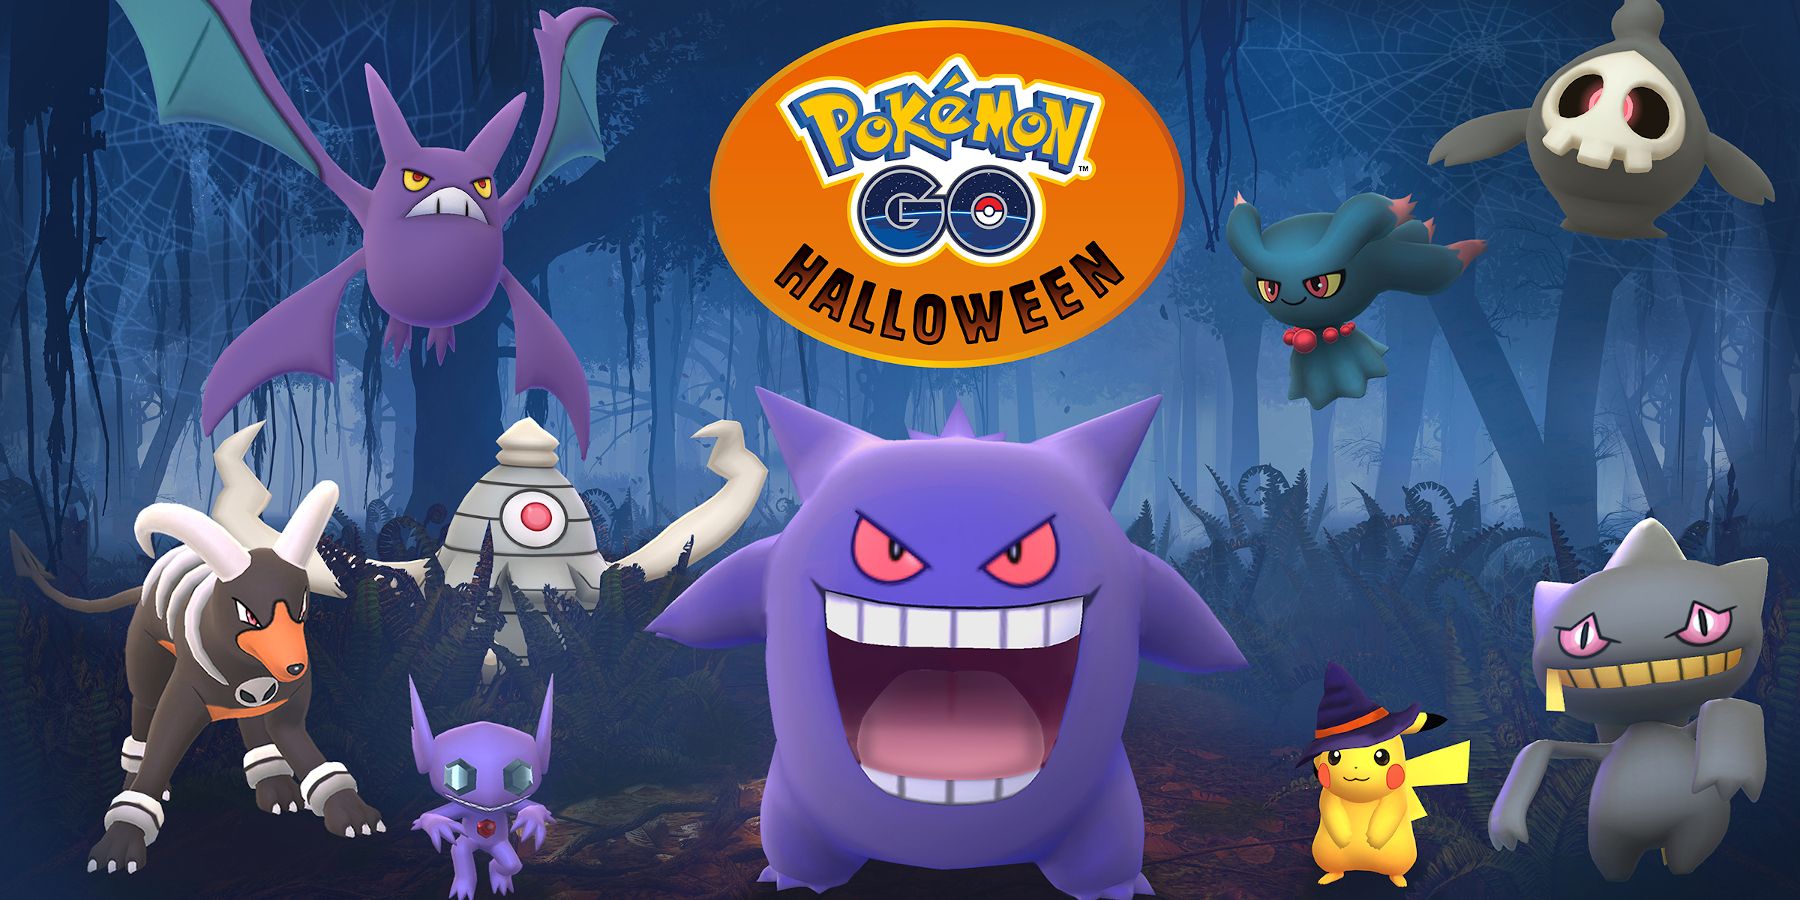 Pokémon Go Halloween 2023 Part 2 event, Timed Research quest steps - Polygon